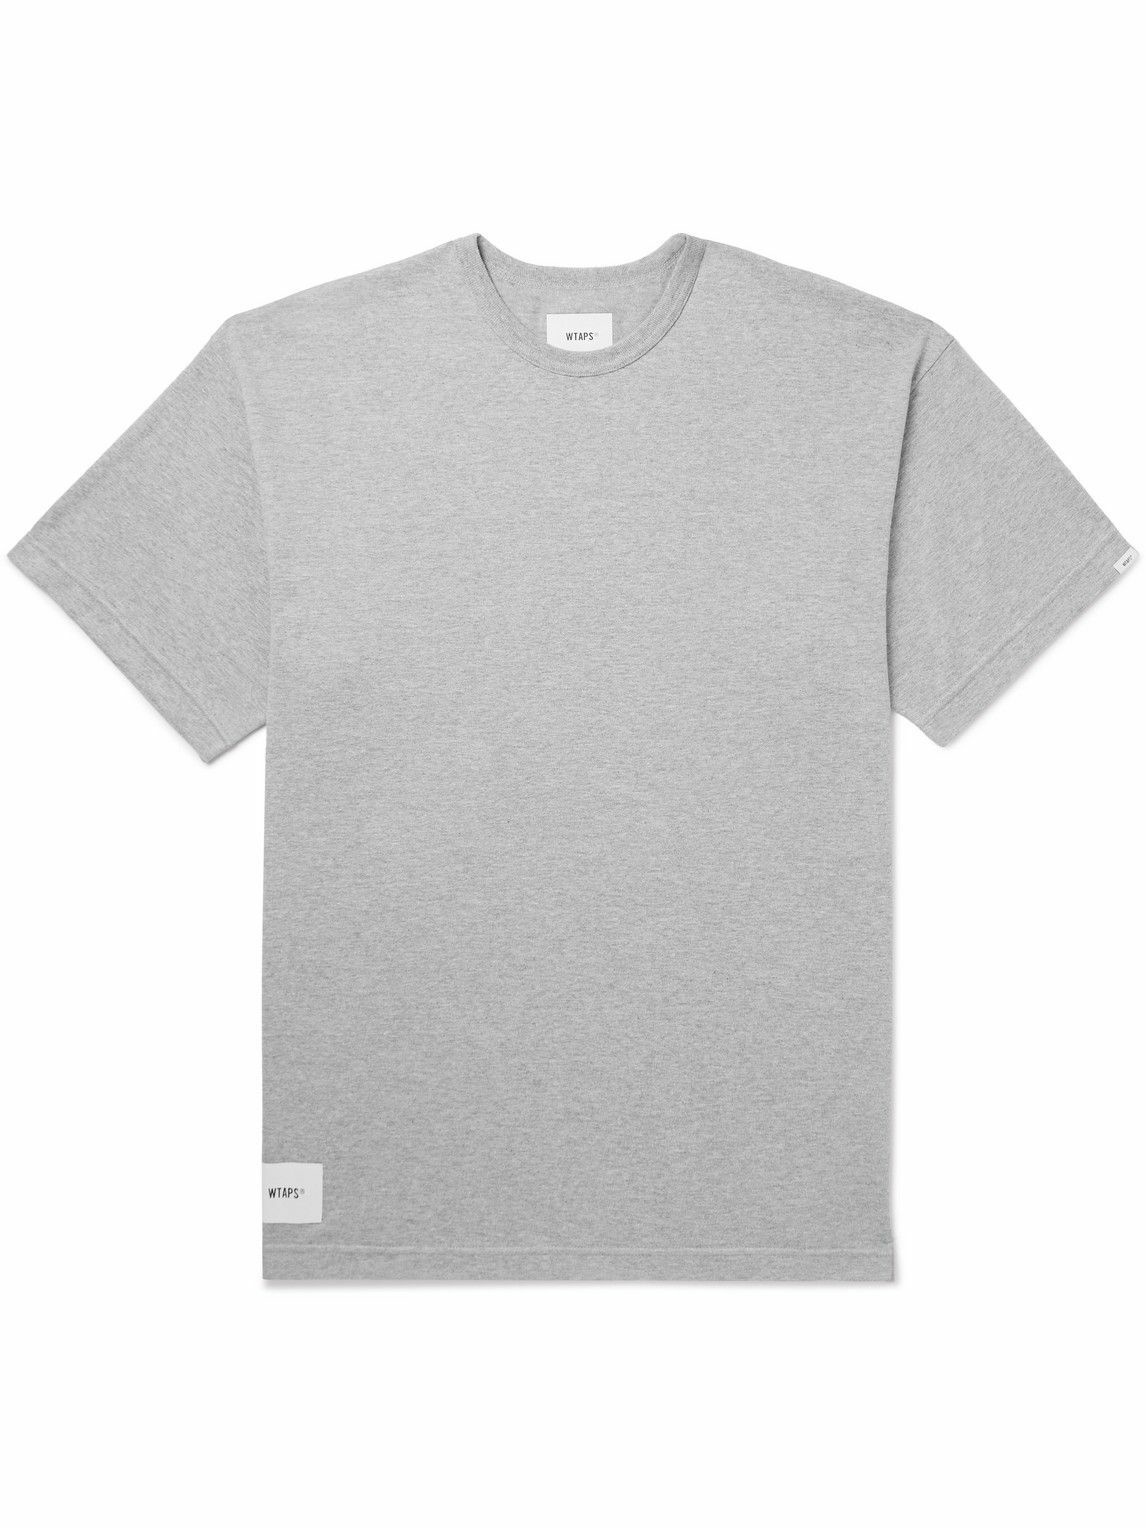 WTAPS - Academy Logo-Appliquéd Printed Cotton-Blend Jersey T-Shirt - Gray  WTAPS